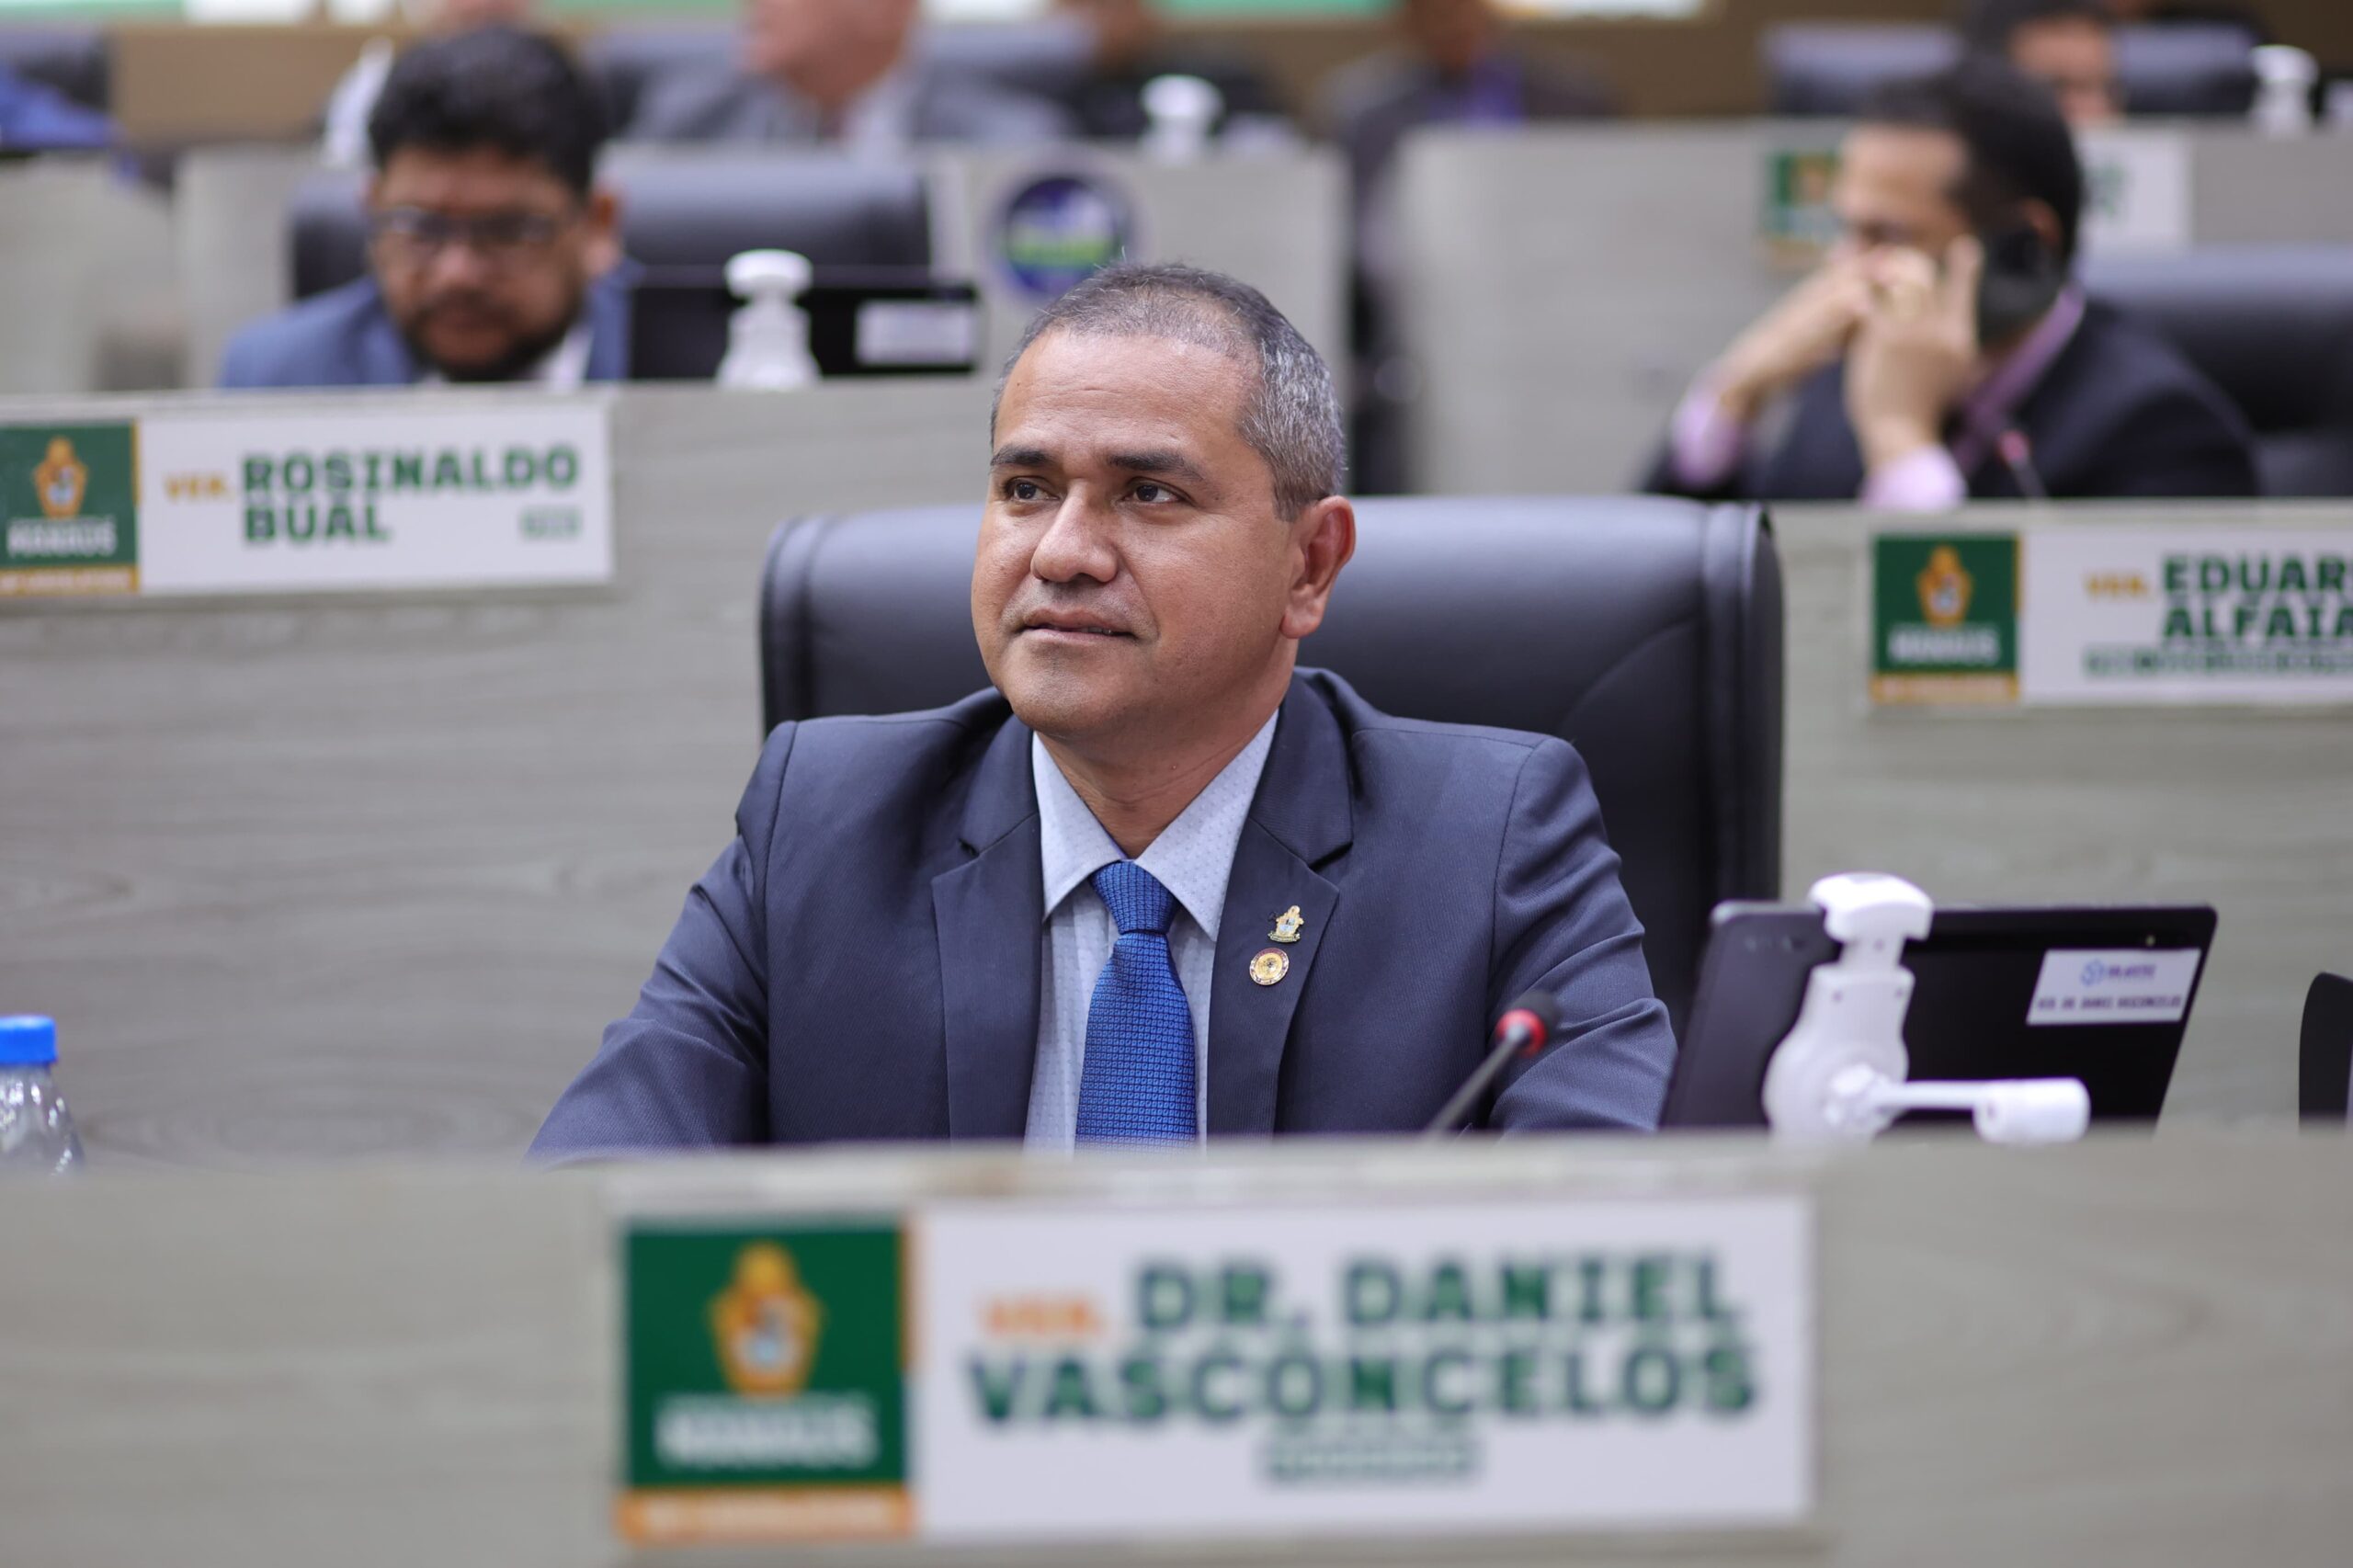 PL de Dr. Daniel Vasconcelos que promove justiça social em Manaus, avança na CMM